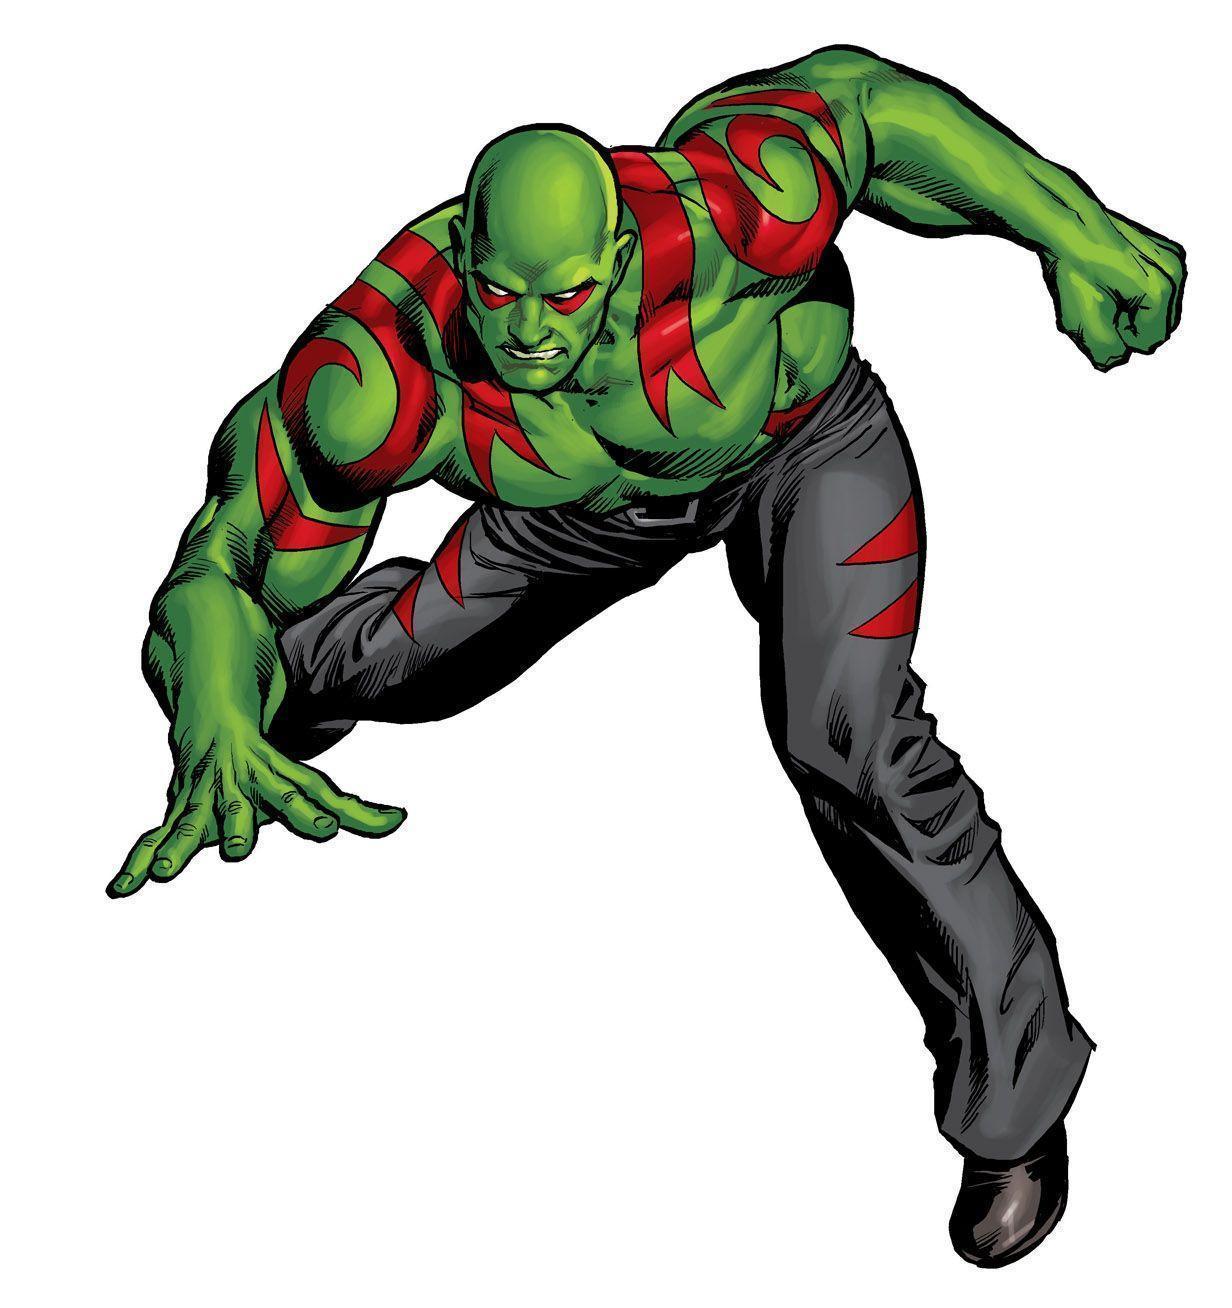 Drax Vs Hulk.. I160.photobucket.com Albums T173 EndlessMike9